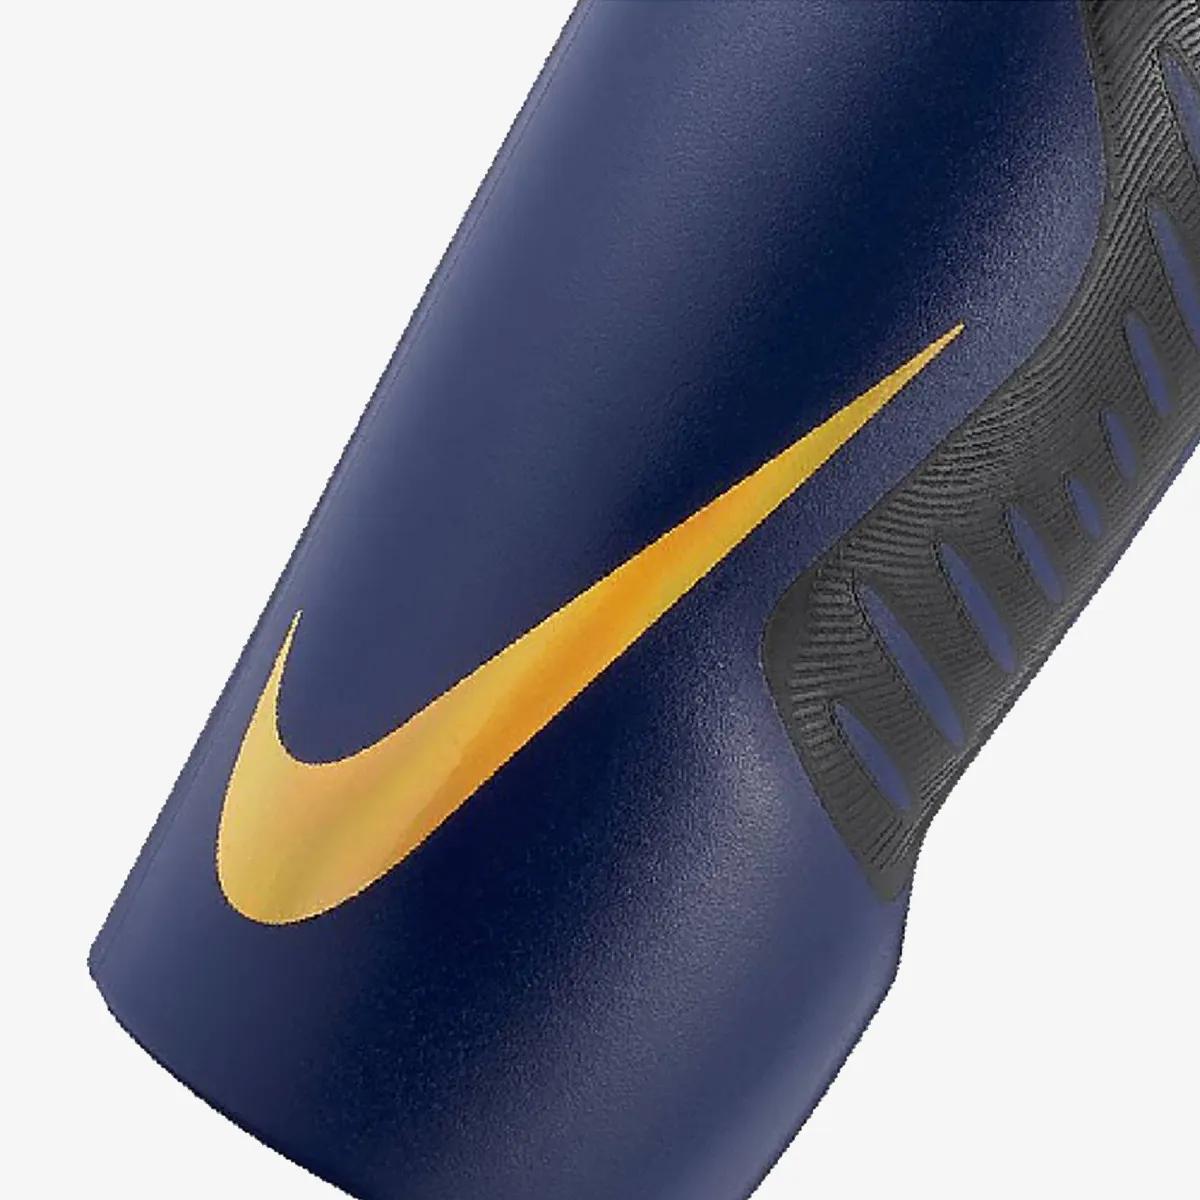 Nike Sticla pentru apa HYPERFUEL BOTTLE 24 OZ 